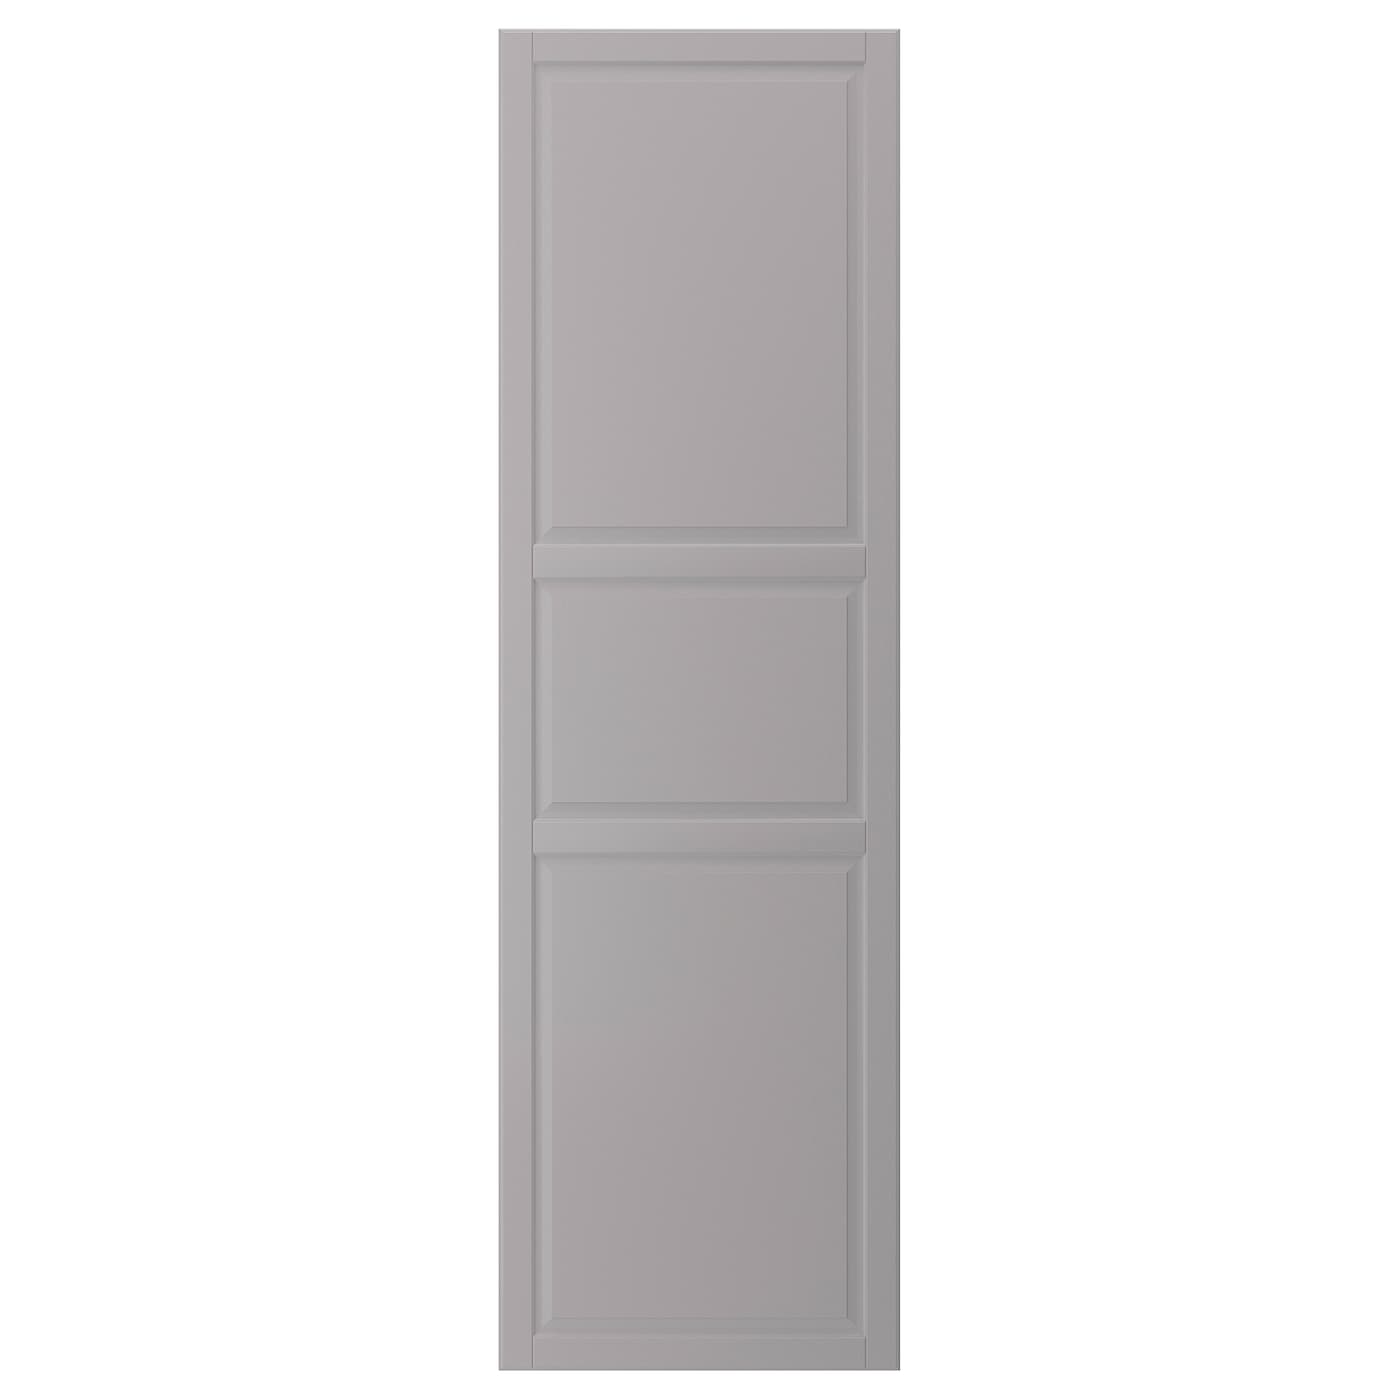 Фасад - IKEA BODBYN, 200х60 см, серый, БУДБИН ИКЕА